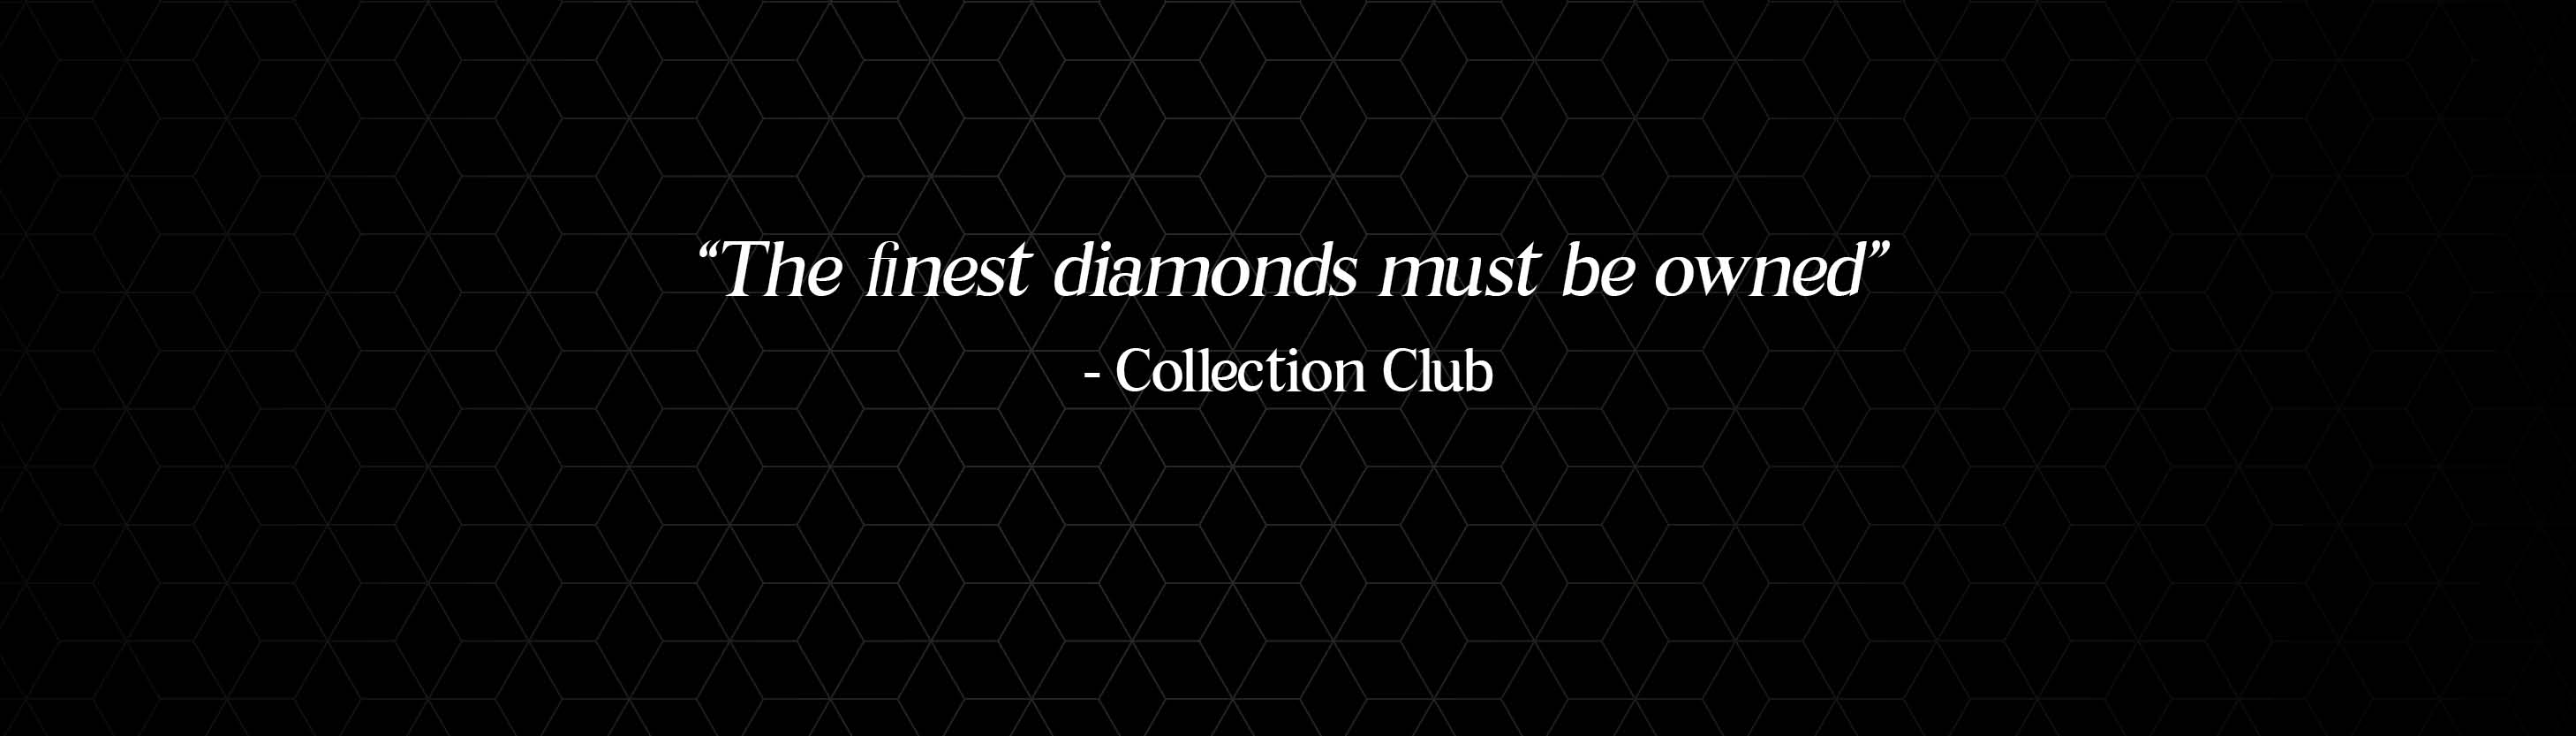 Diamond Club Collection OpenSea